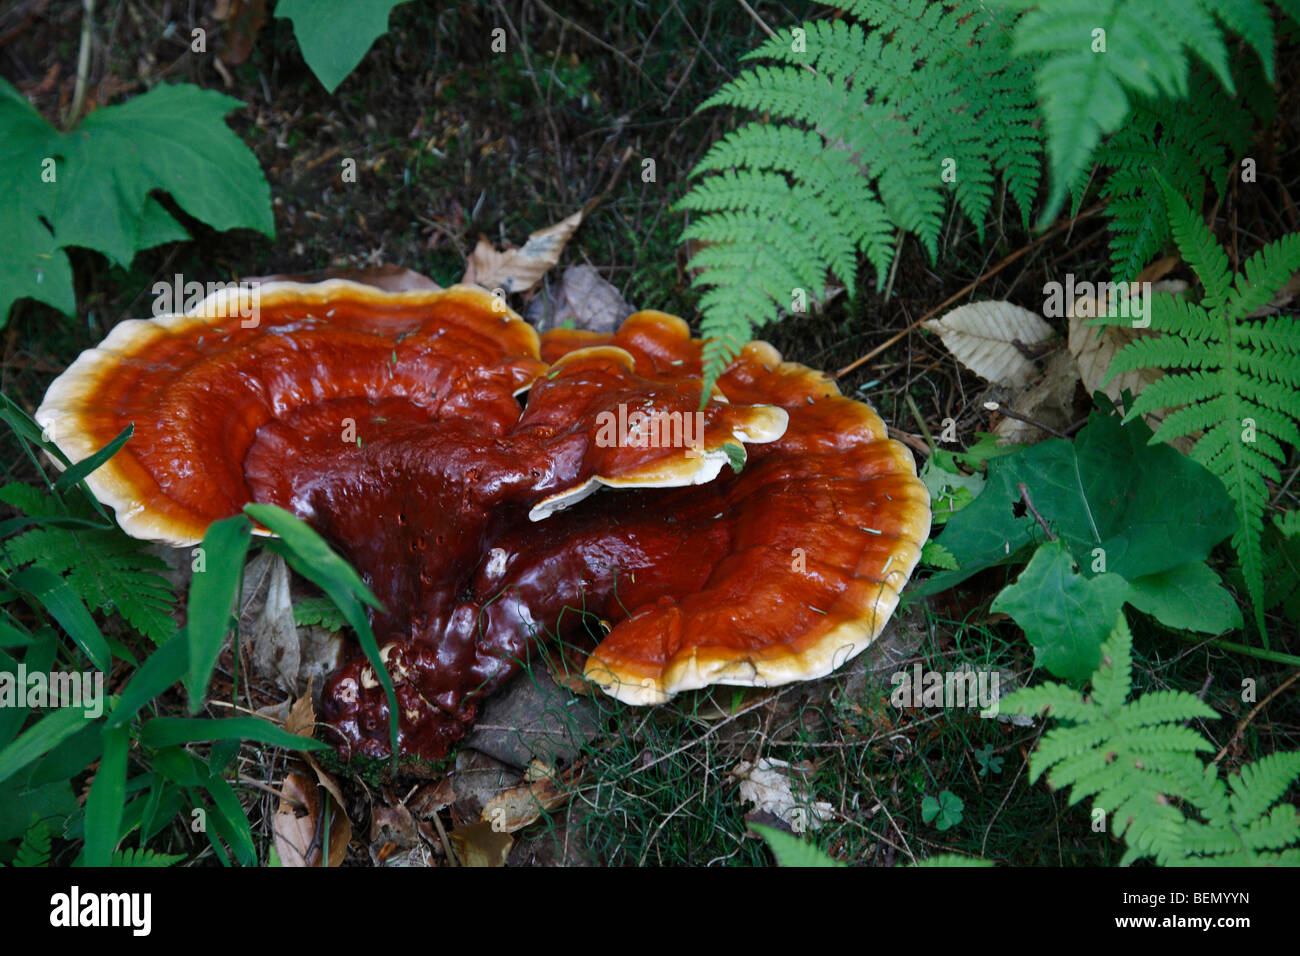 Ling Chih mushroom Ganoderma lucidum found in Michigan USA Reishi edible mushrooms nobody photos green nature is inspiration hi-res Stock Photo